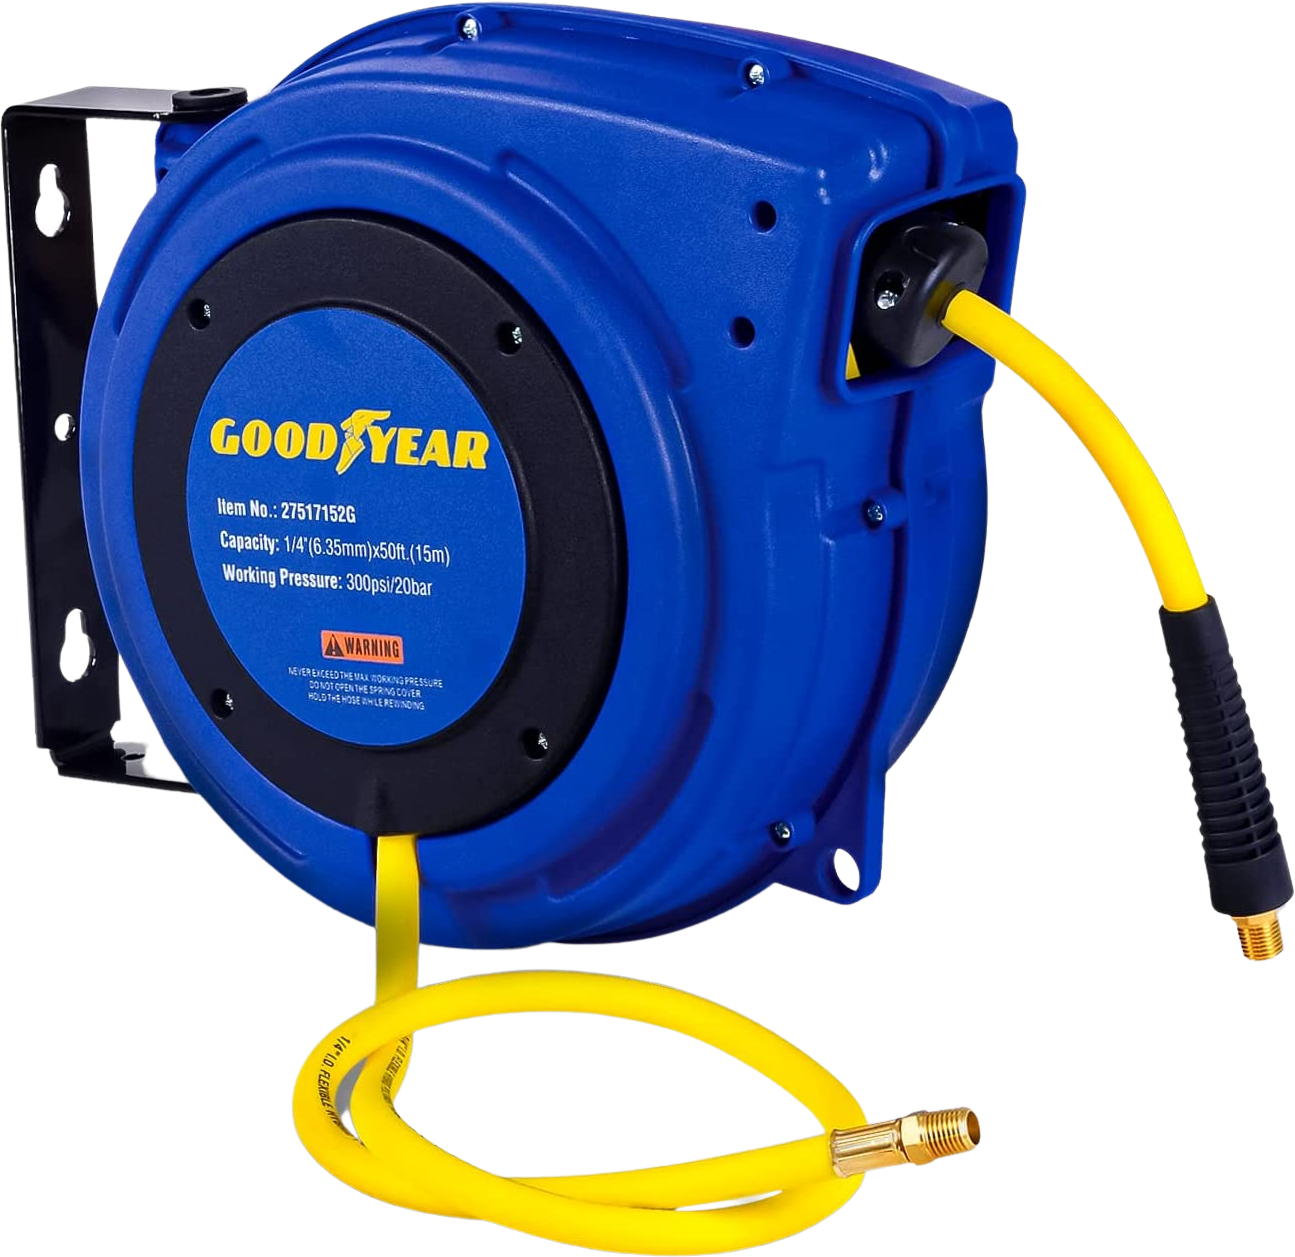 Goodyear GUR008 Retractable Hose Reel Air/Water 300 PSI 1/4